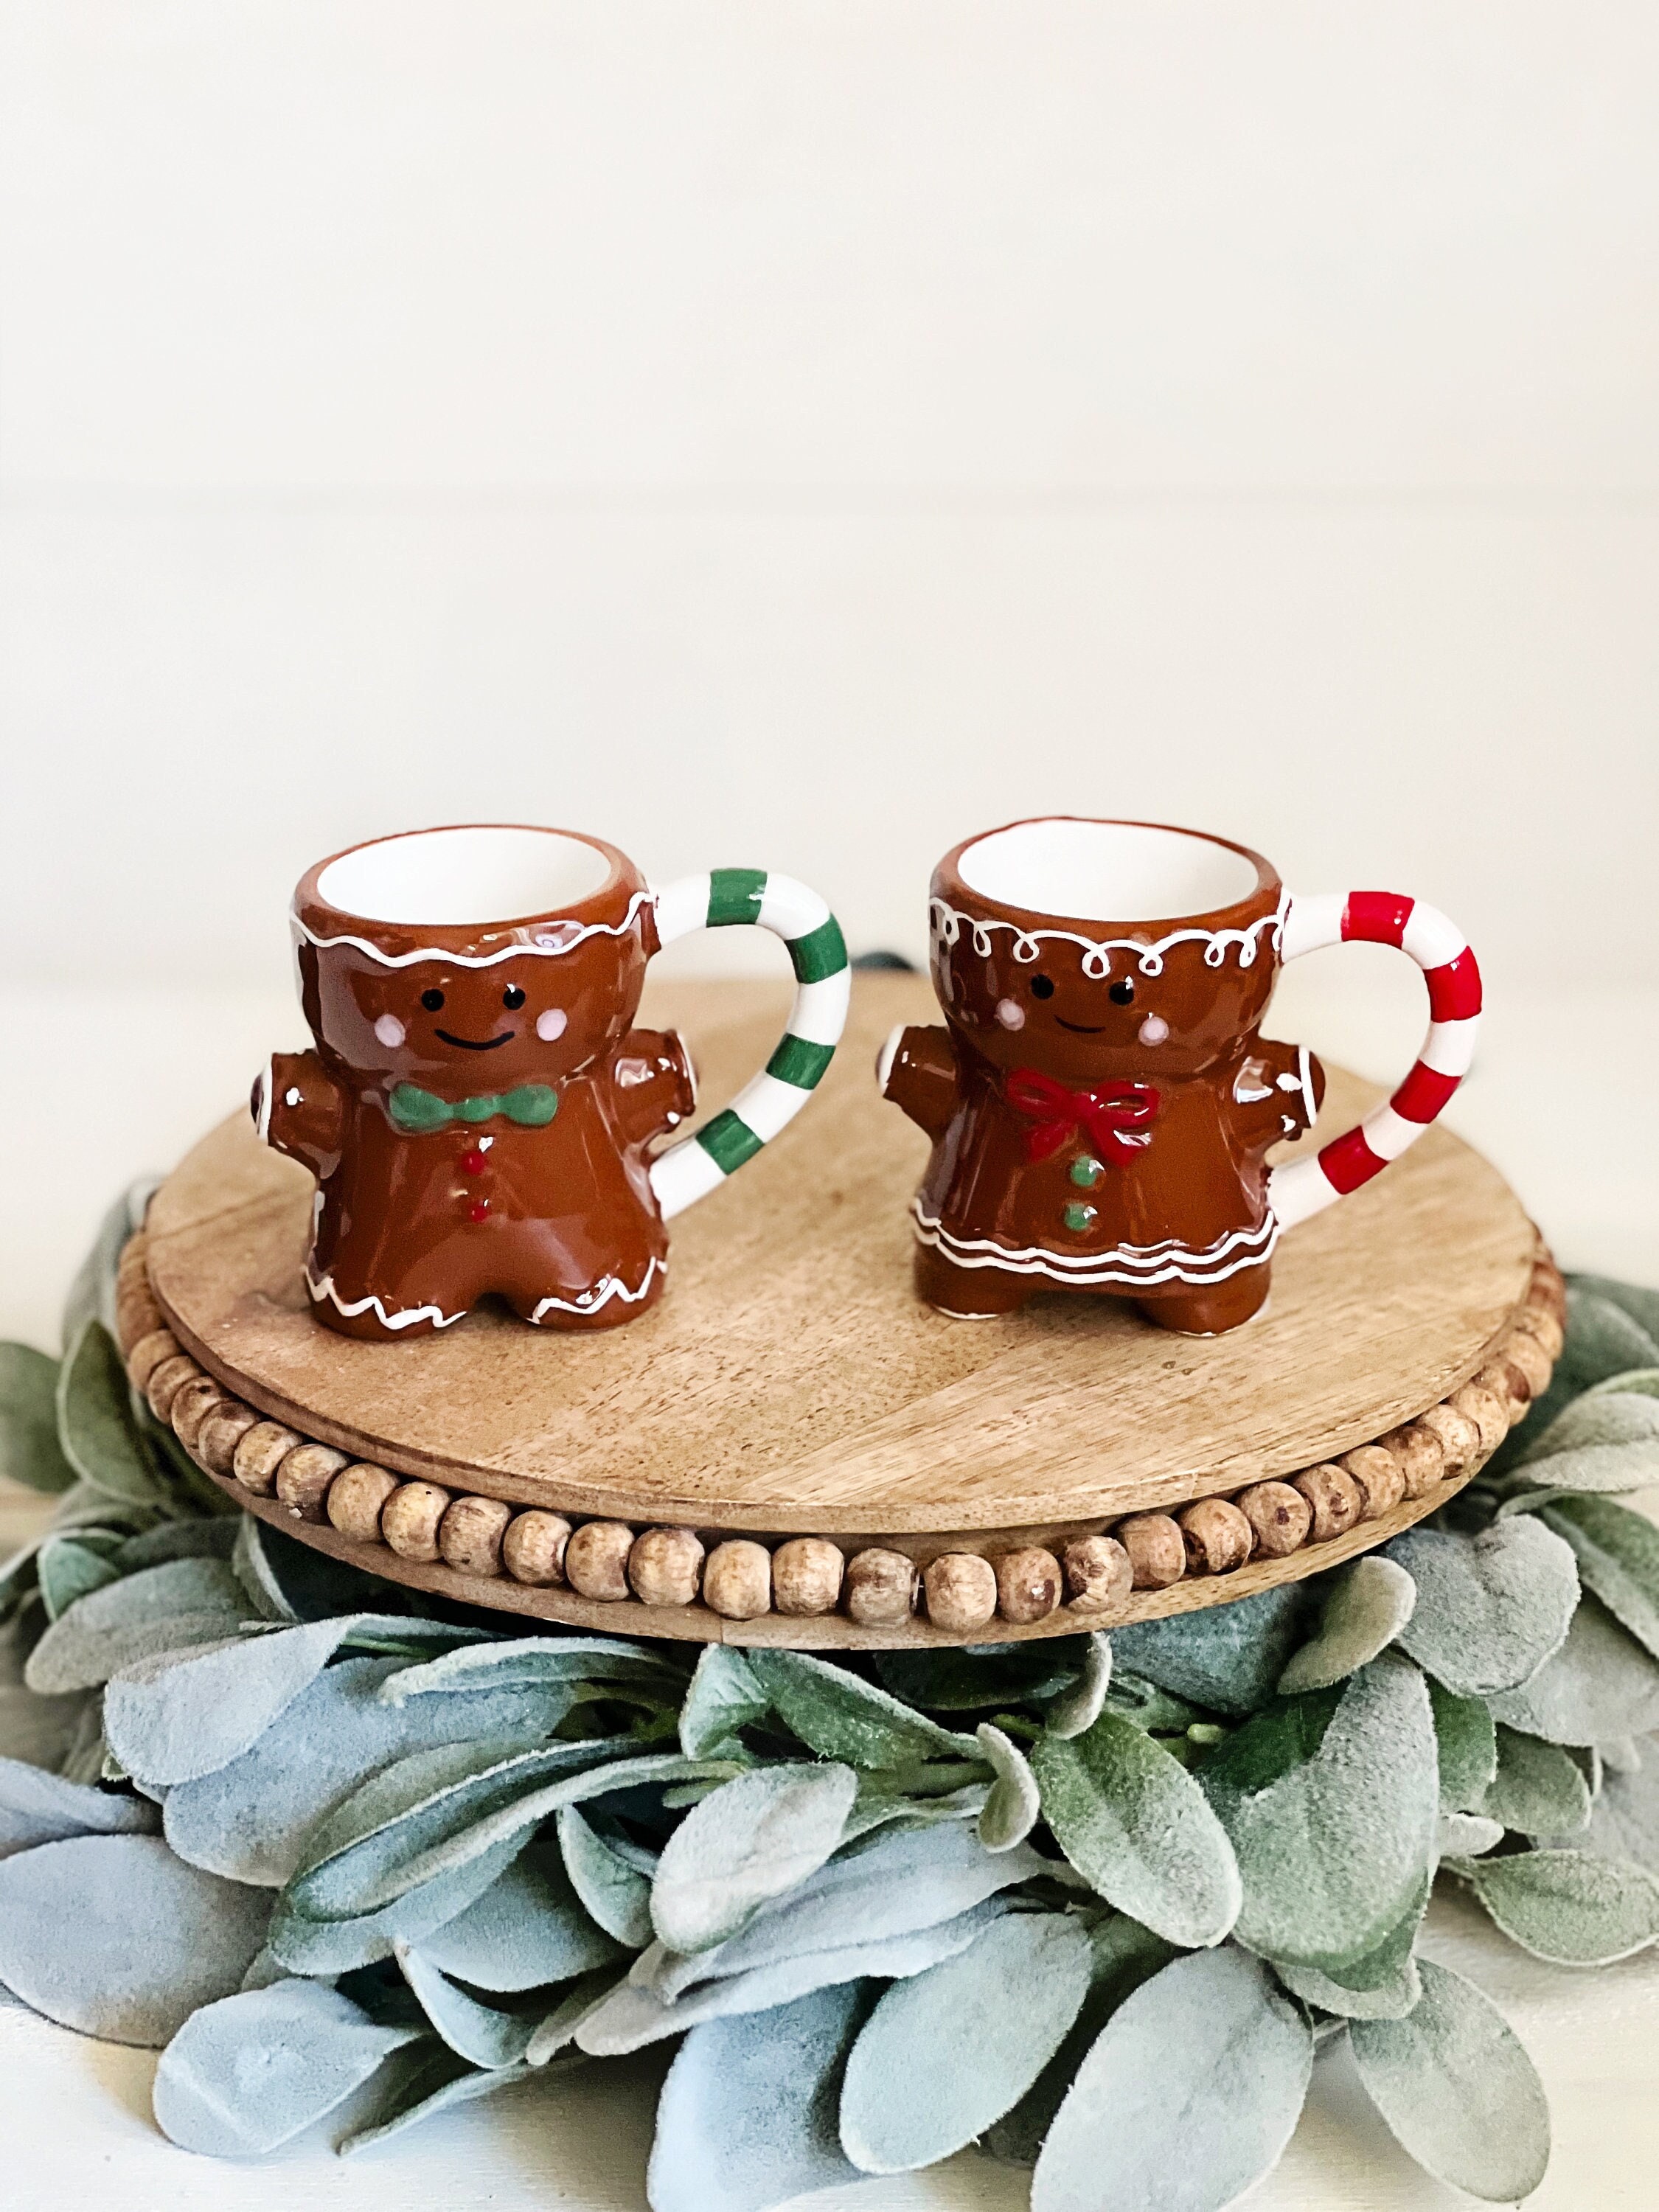 17oz. Gingerbread Ceramic Mug by Celebrate It™